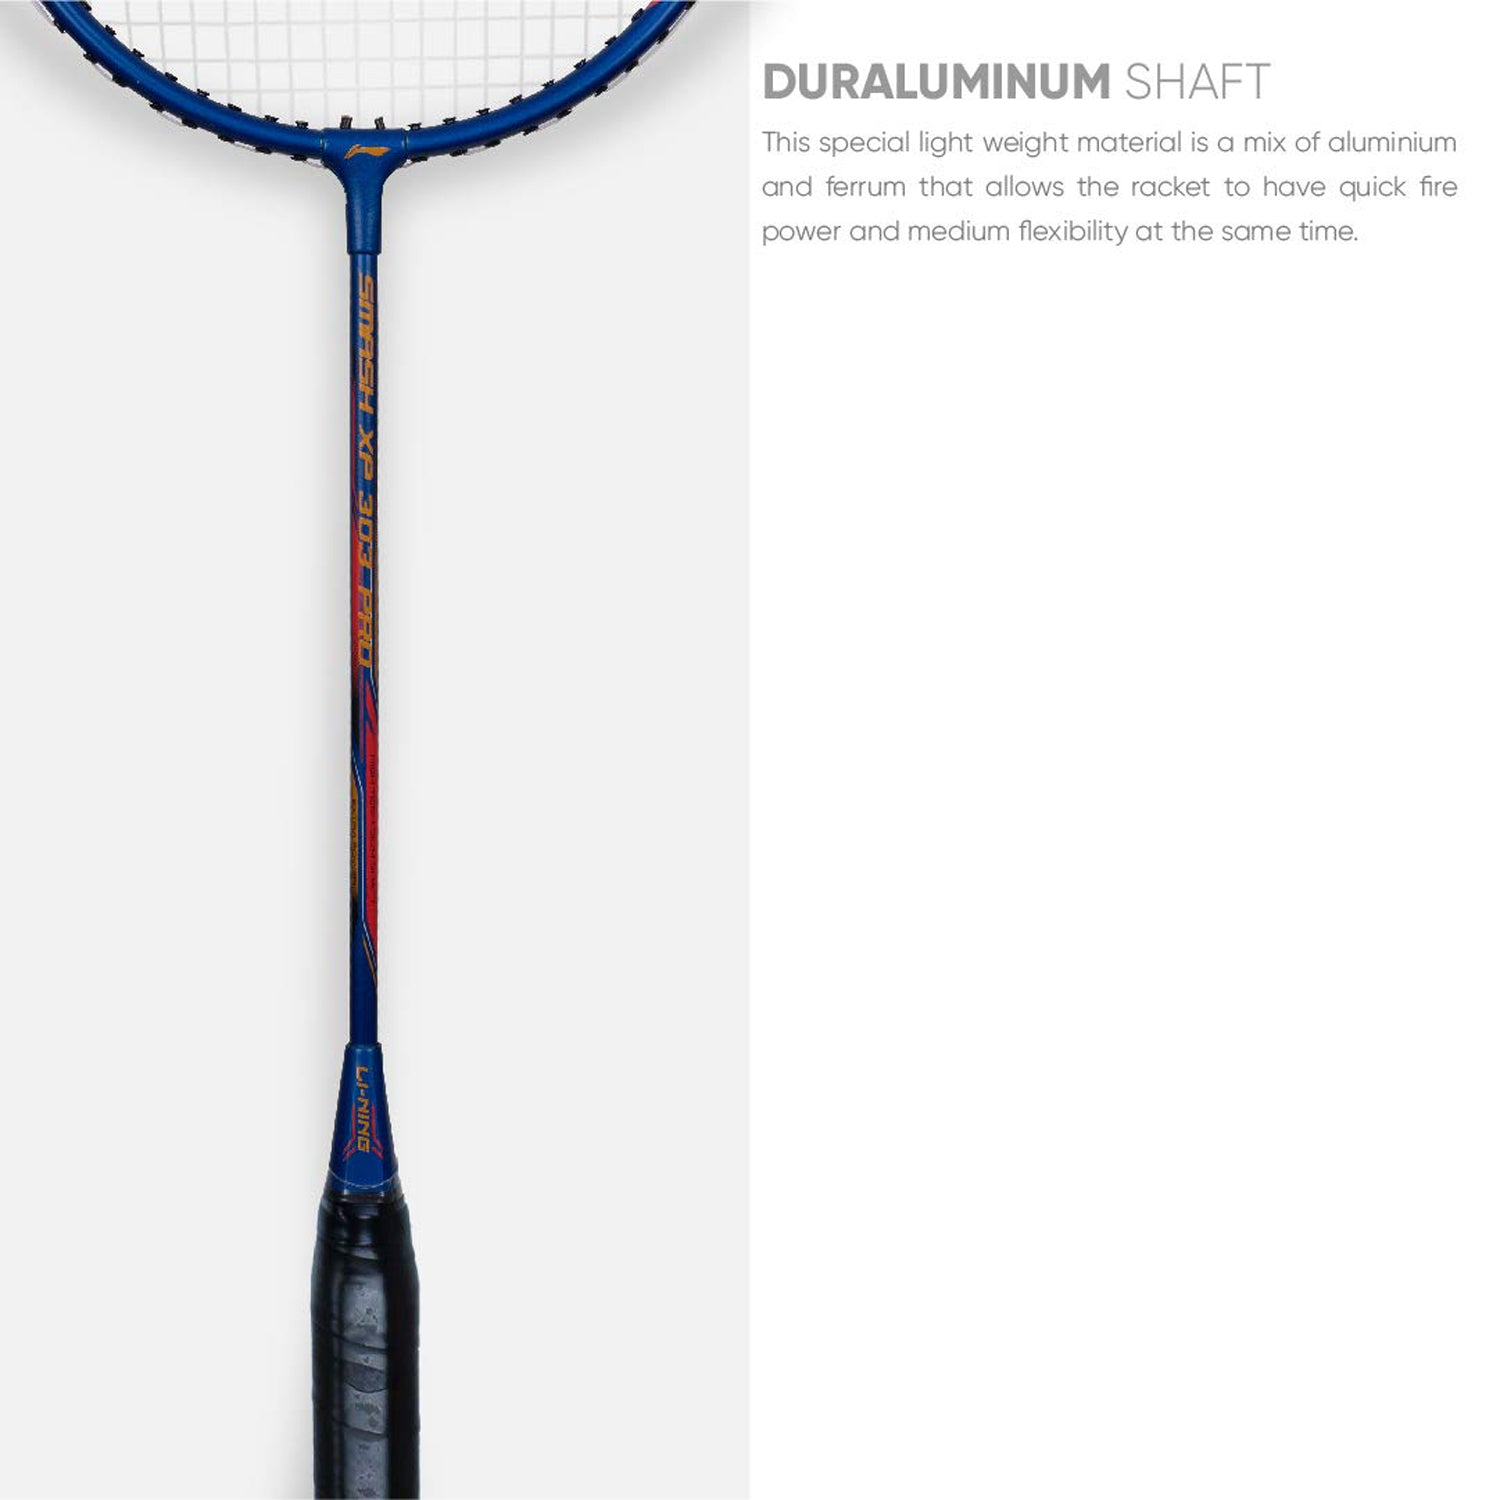 Li-Ning XP 303 PRO Strung Badminton Racket with Free Head Cover, Navy/Red - Best Price online Prokicksports.com